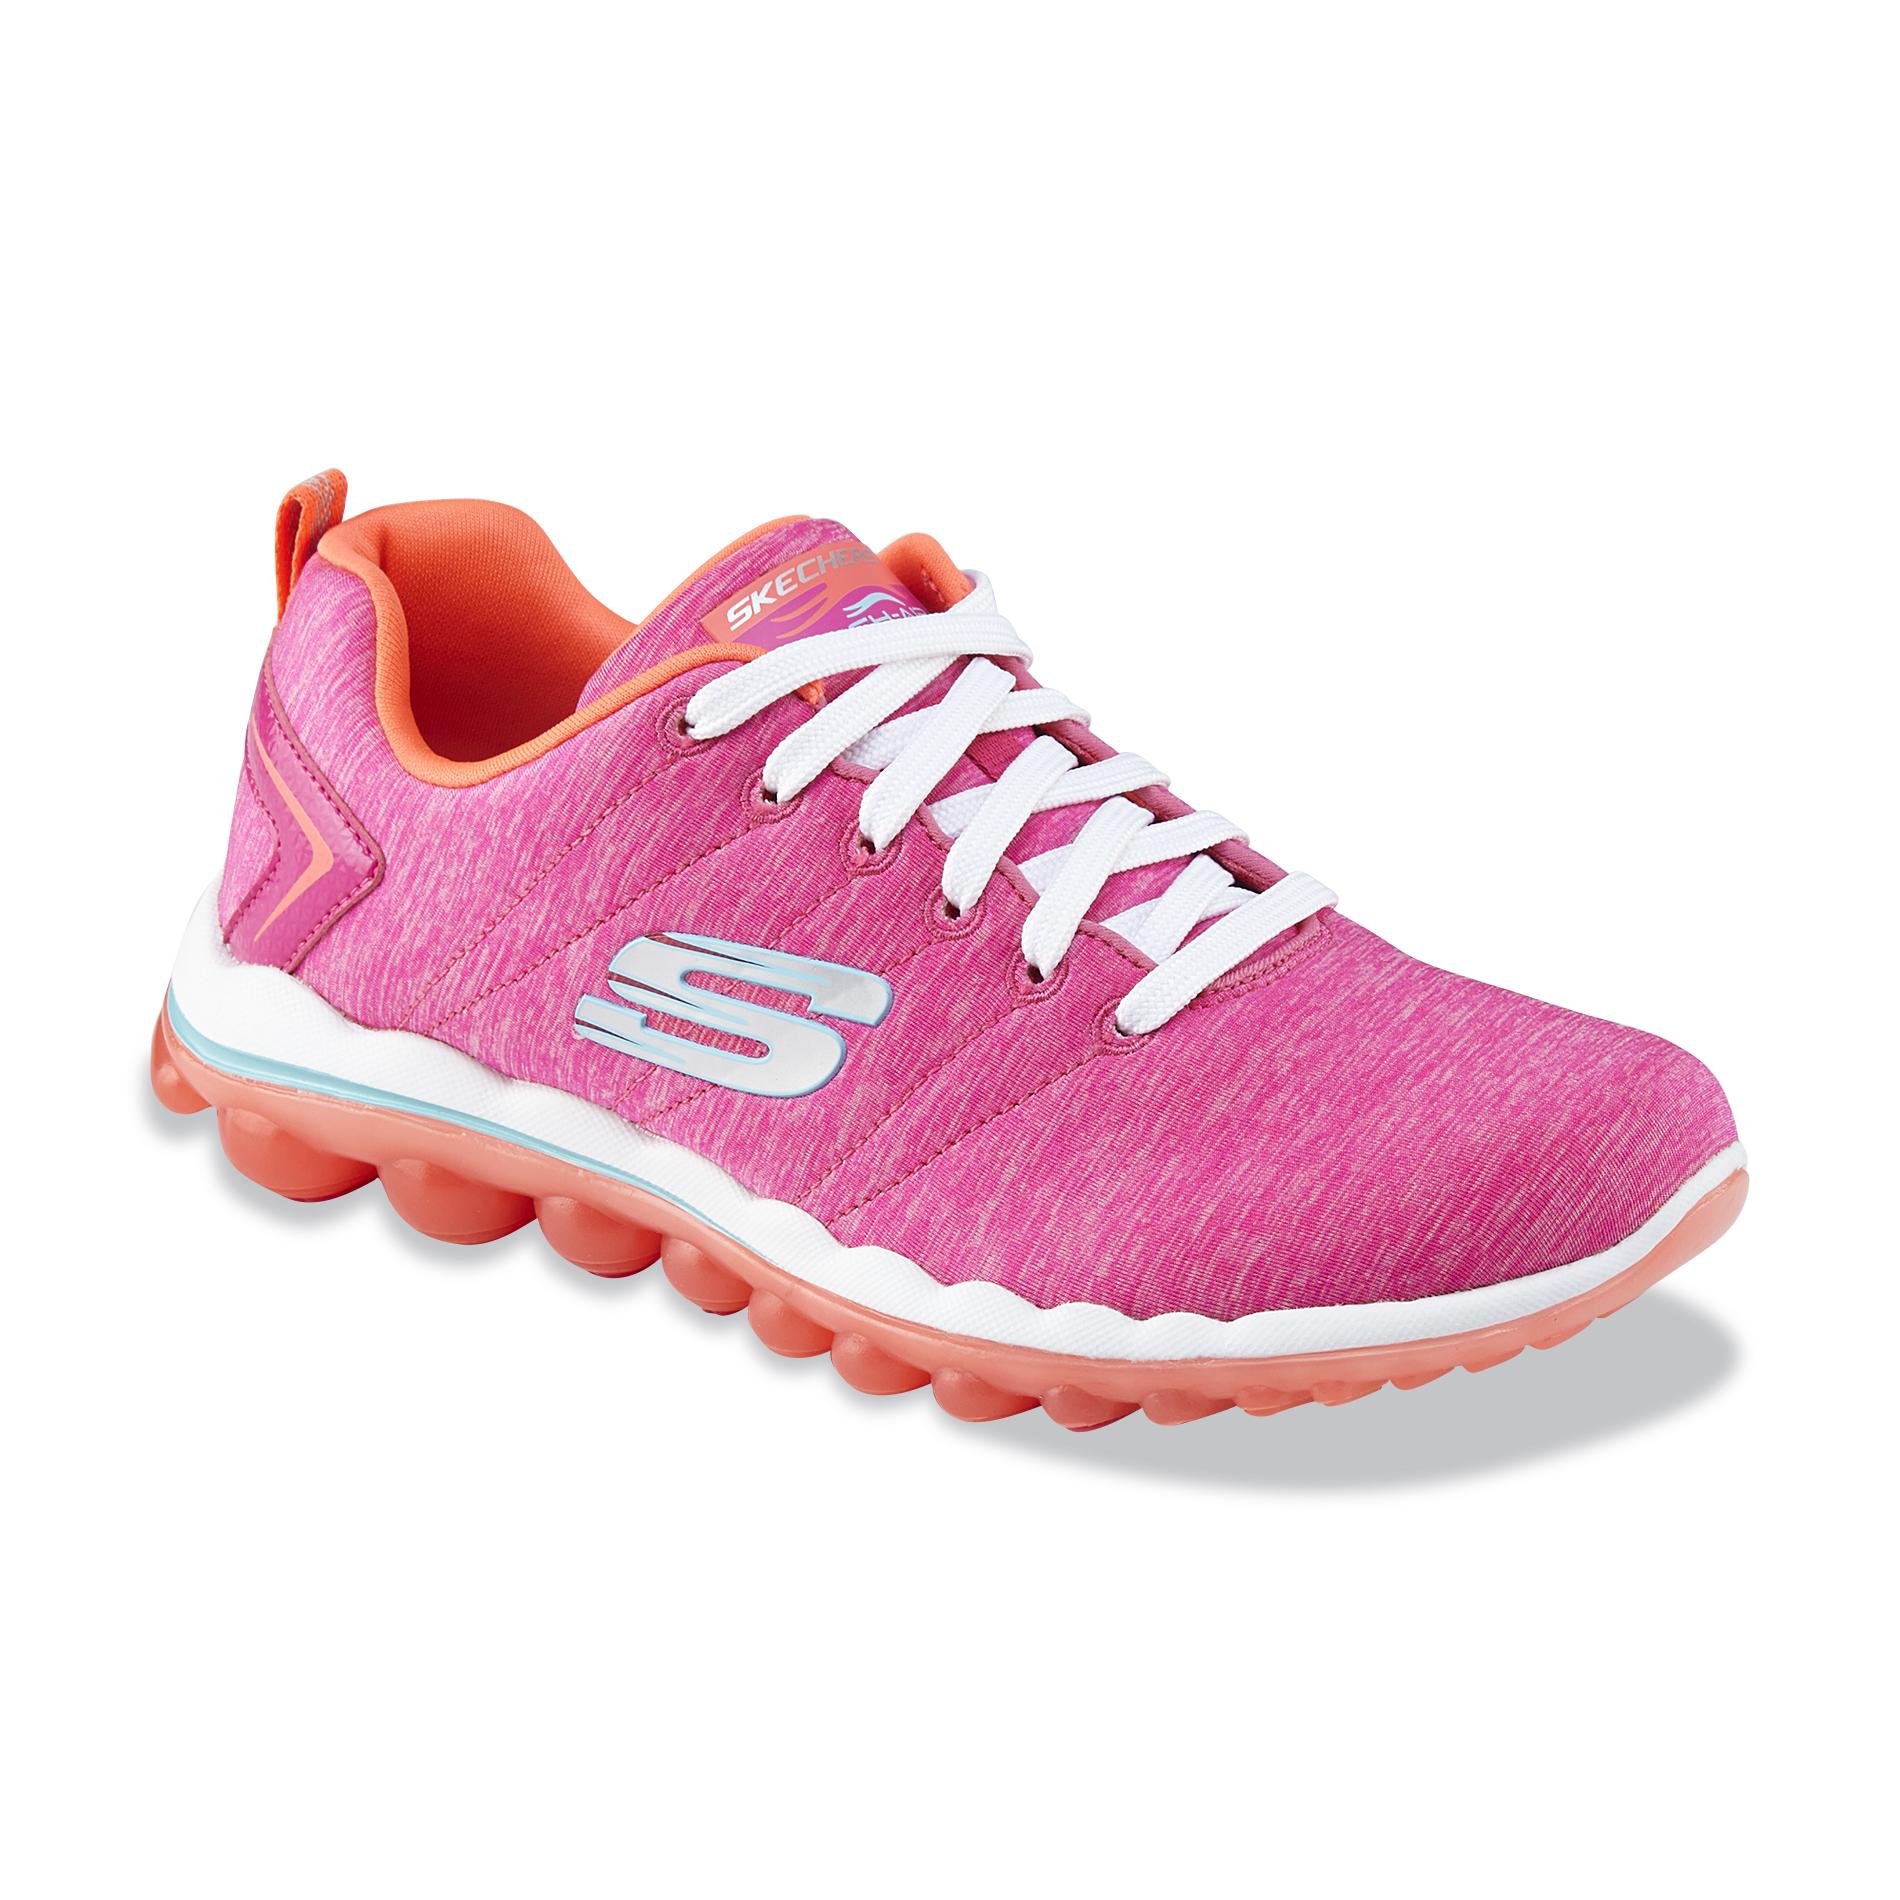 Skechers Women's Sweet Life Neon Pink/Orange Athletic Shoe - Shoes ...